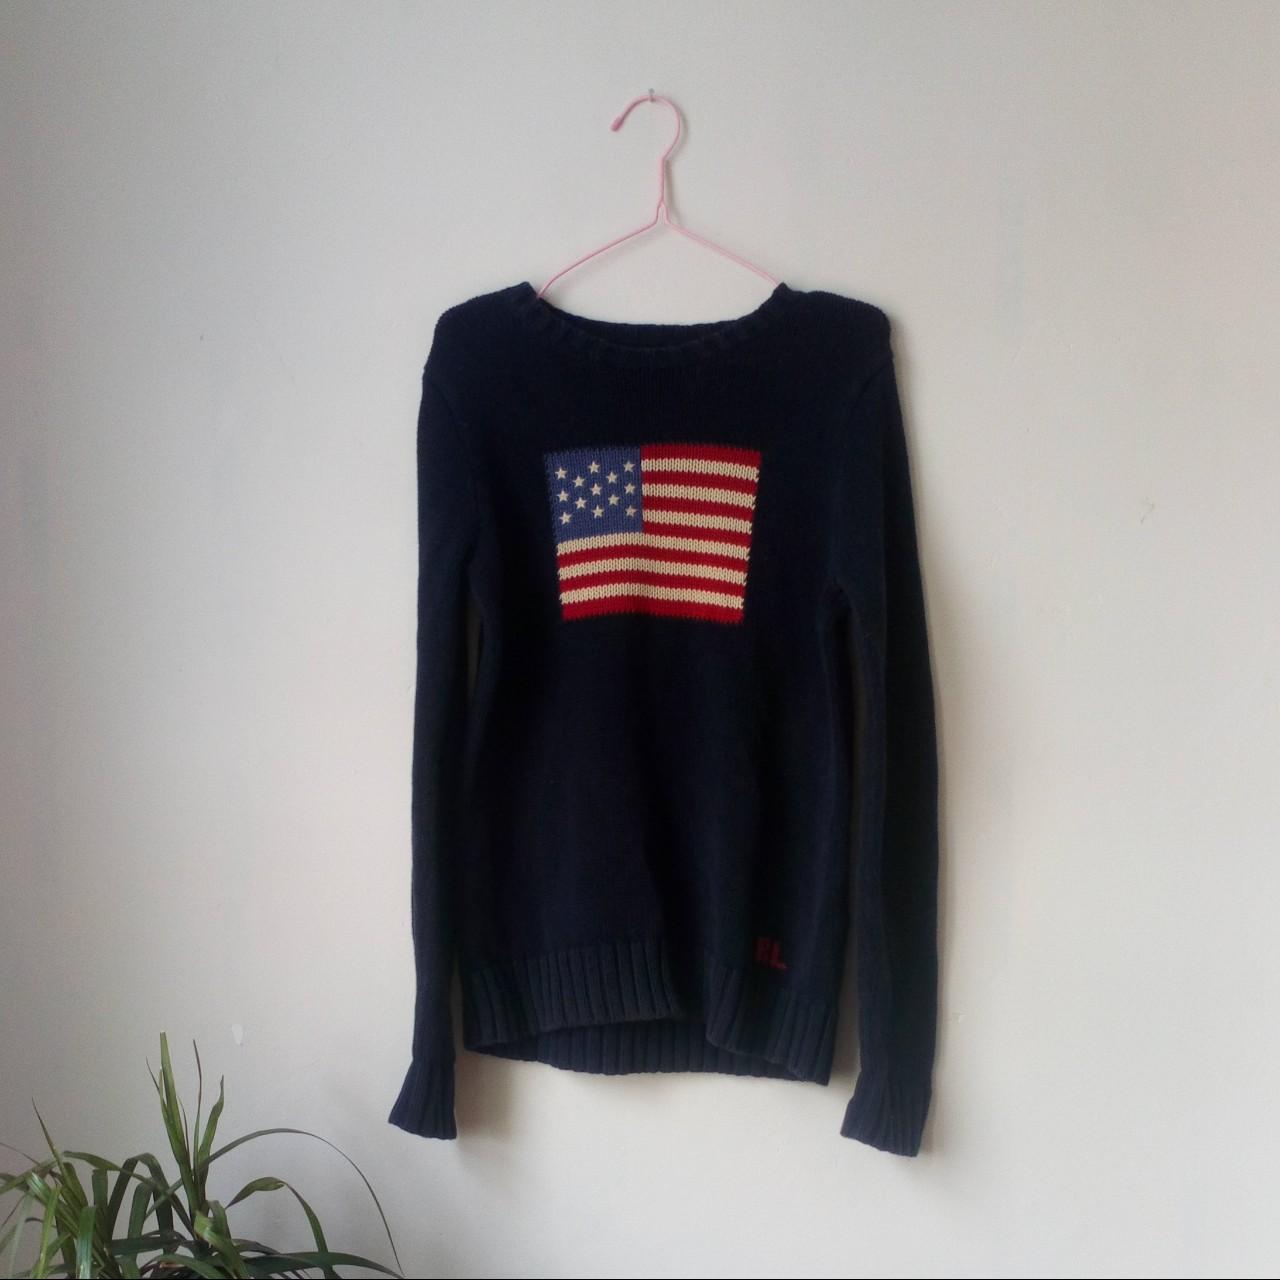 Polo Ralph Lauren knitted American flag jumper in... - Depop